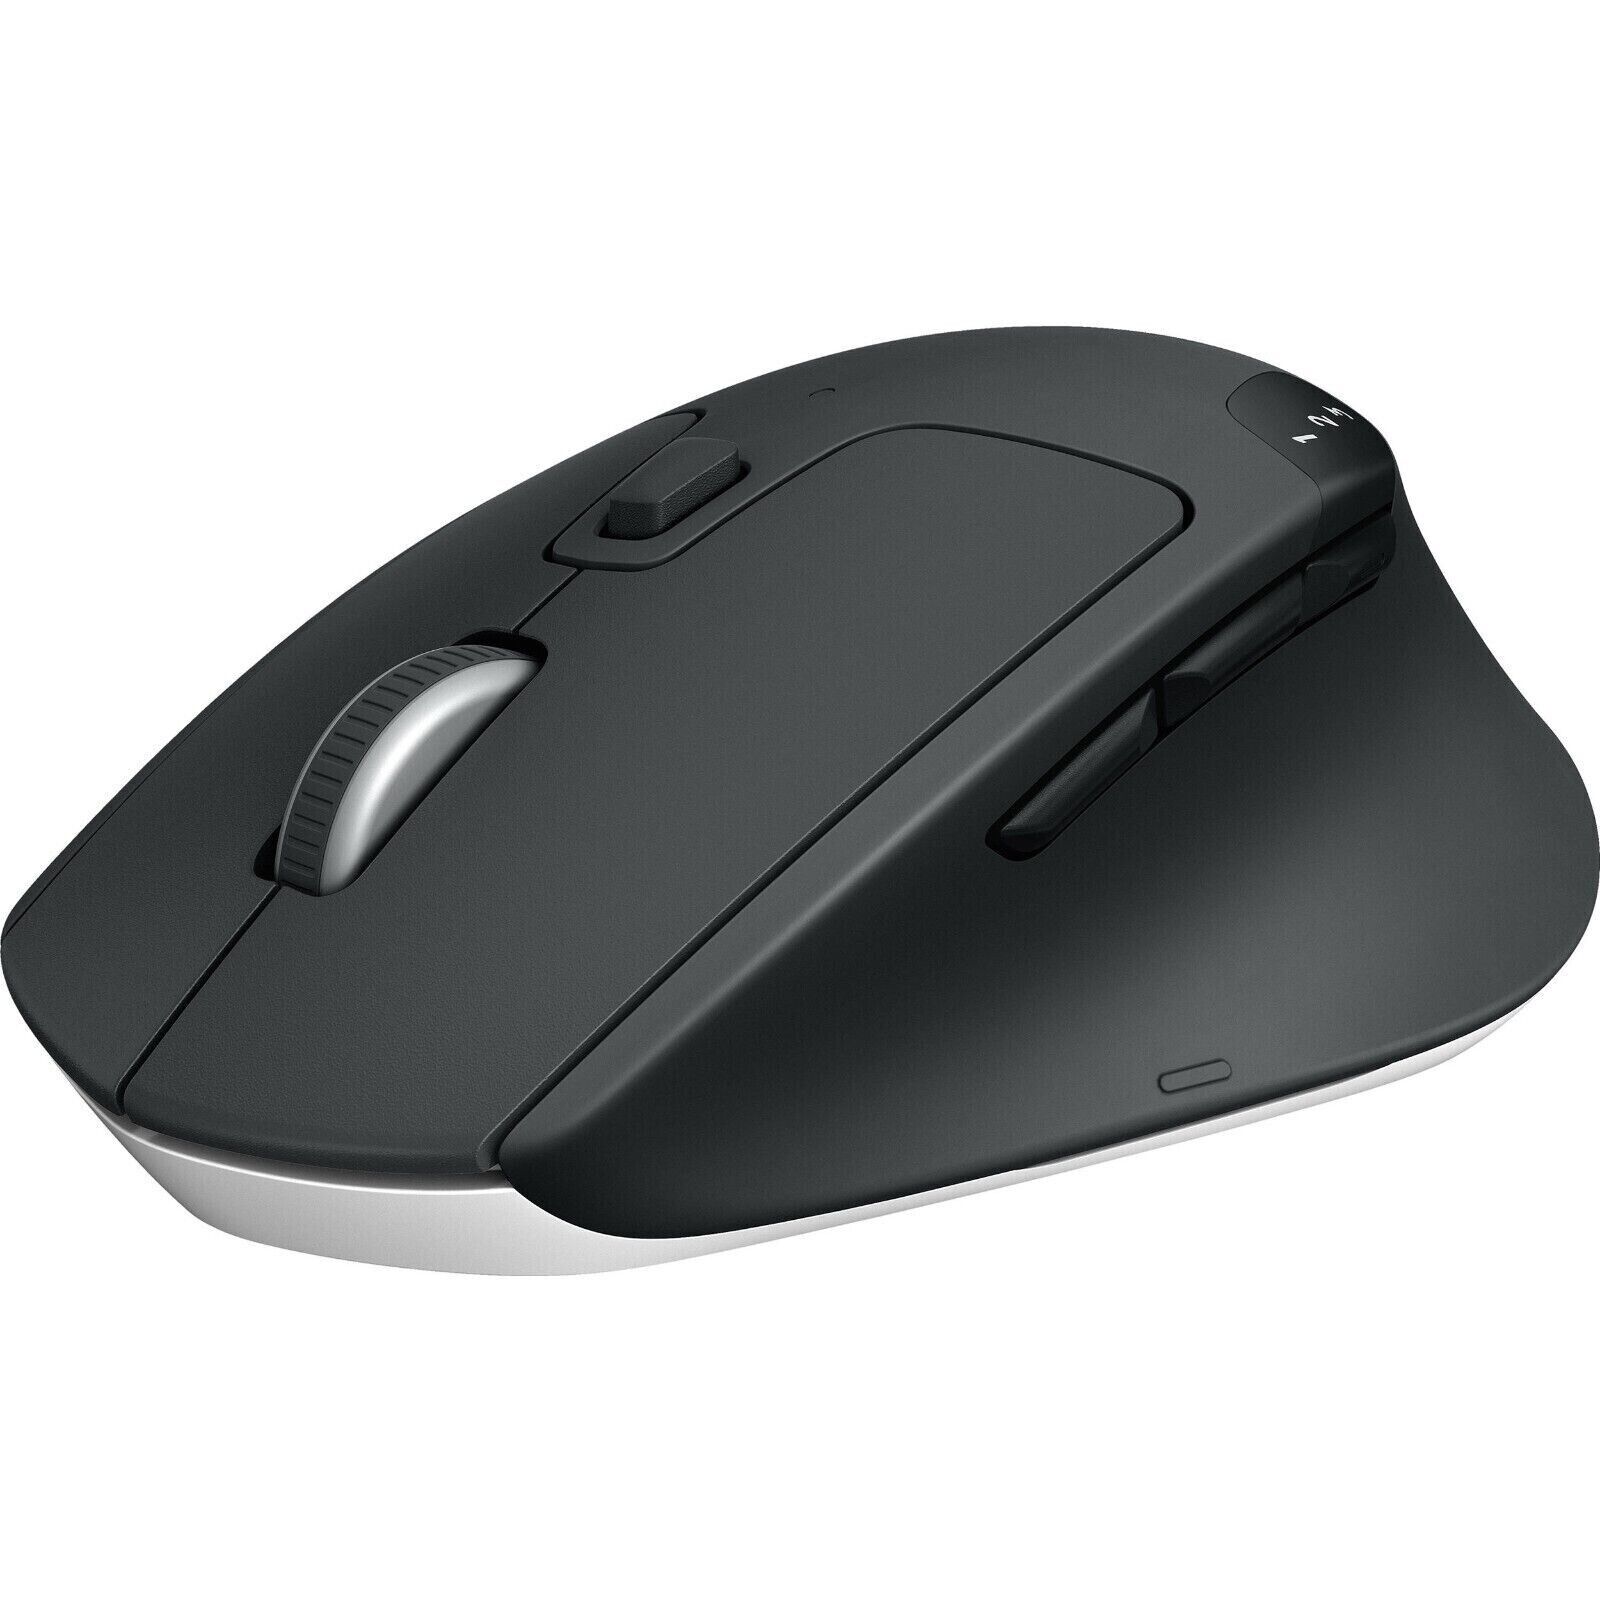 Logitech M720 Triathlon Multi-Device Wireless Mouse with Hyper-Fast Scrolling